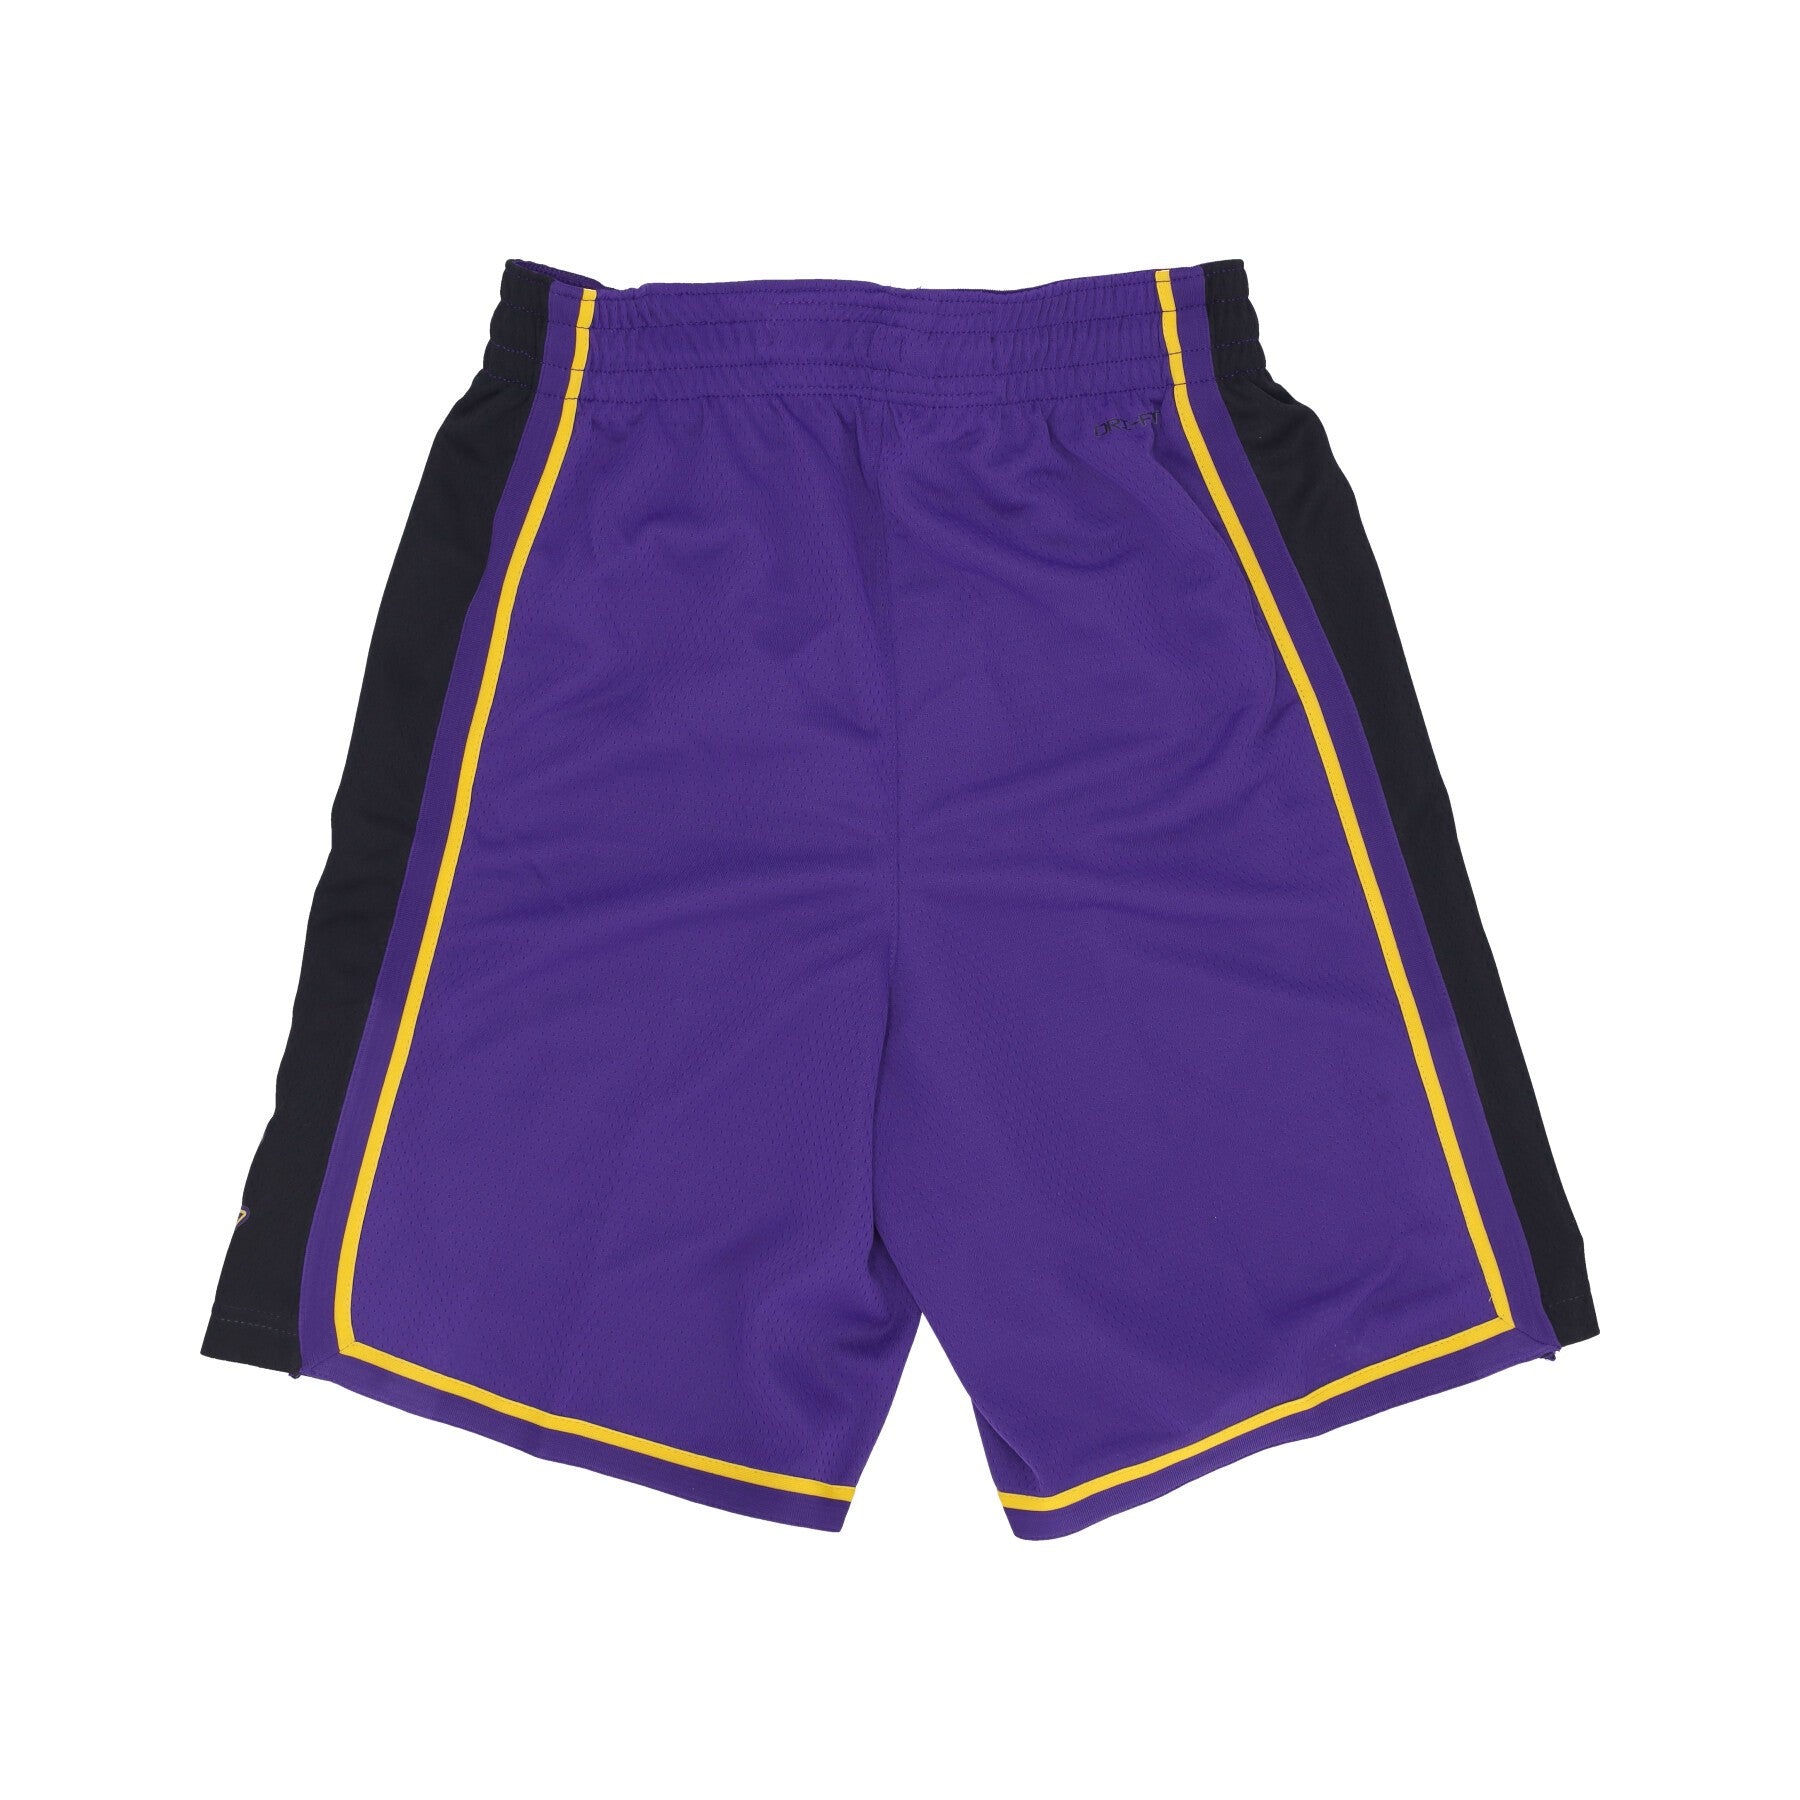 Men's Basketball Shorts NBA Statement Edition 22 Dri-fit Swingman Short Loslak Field Purple